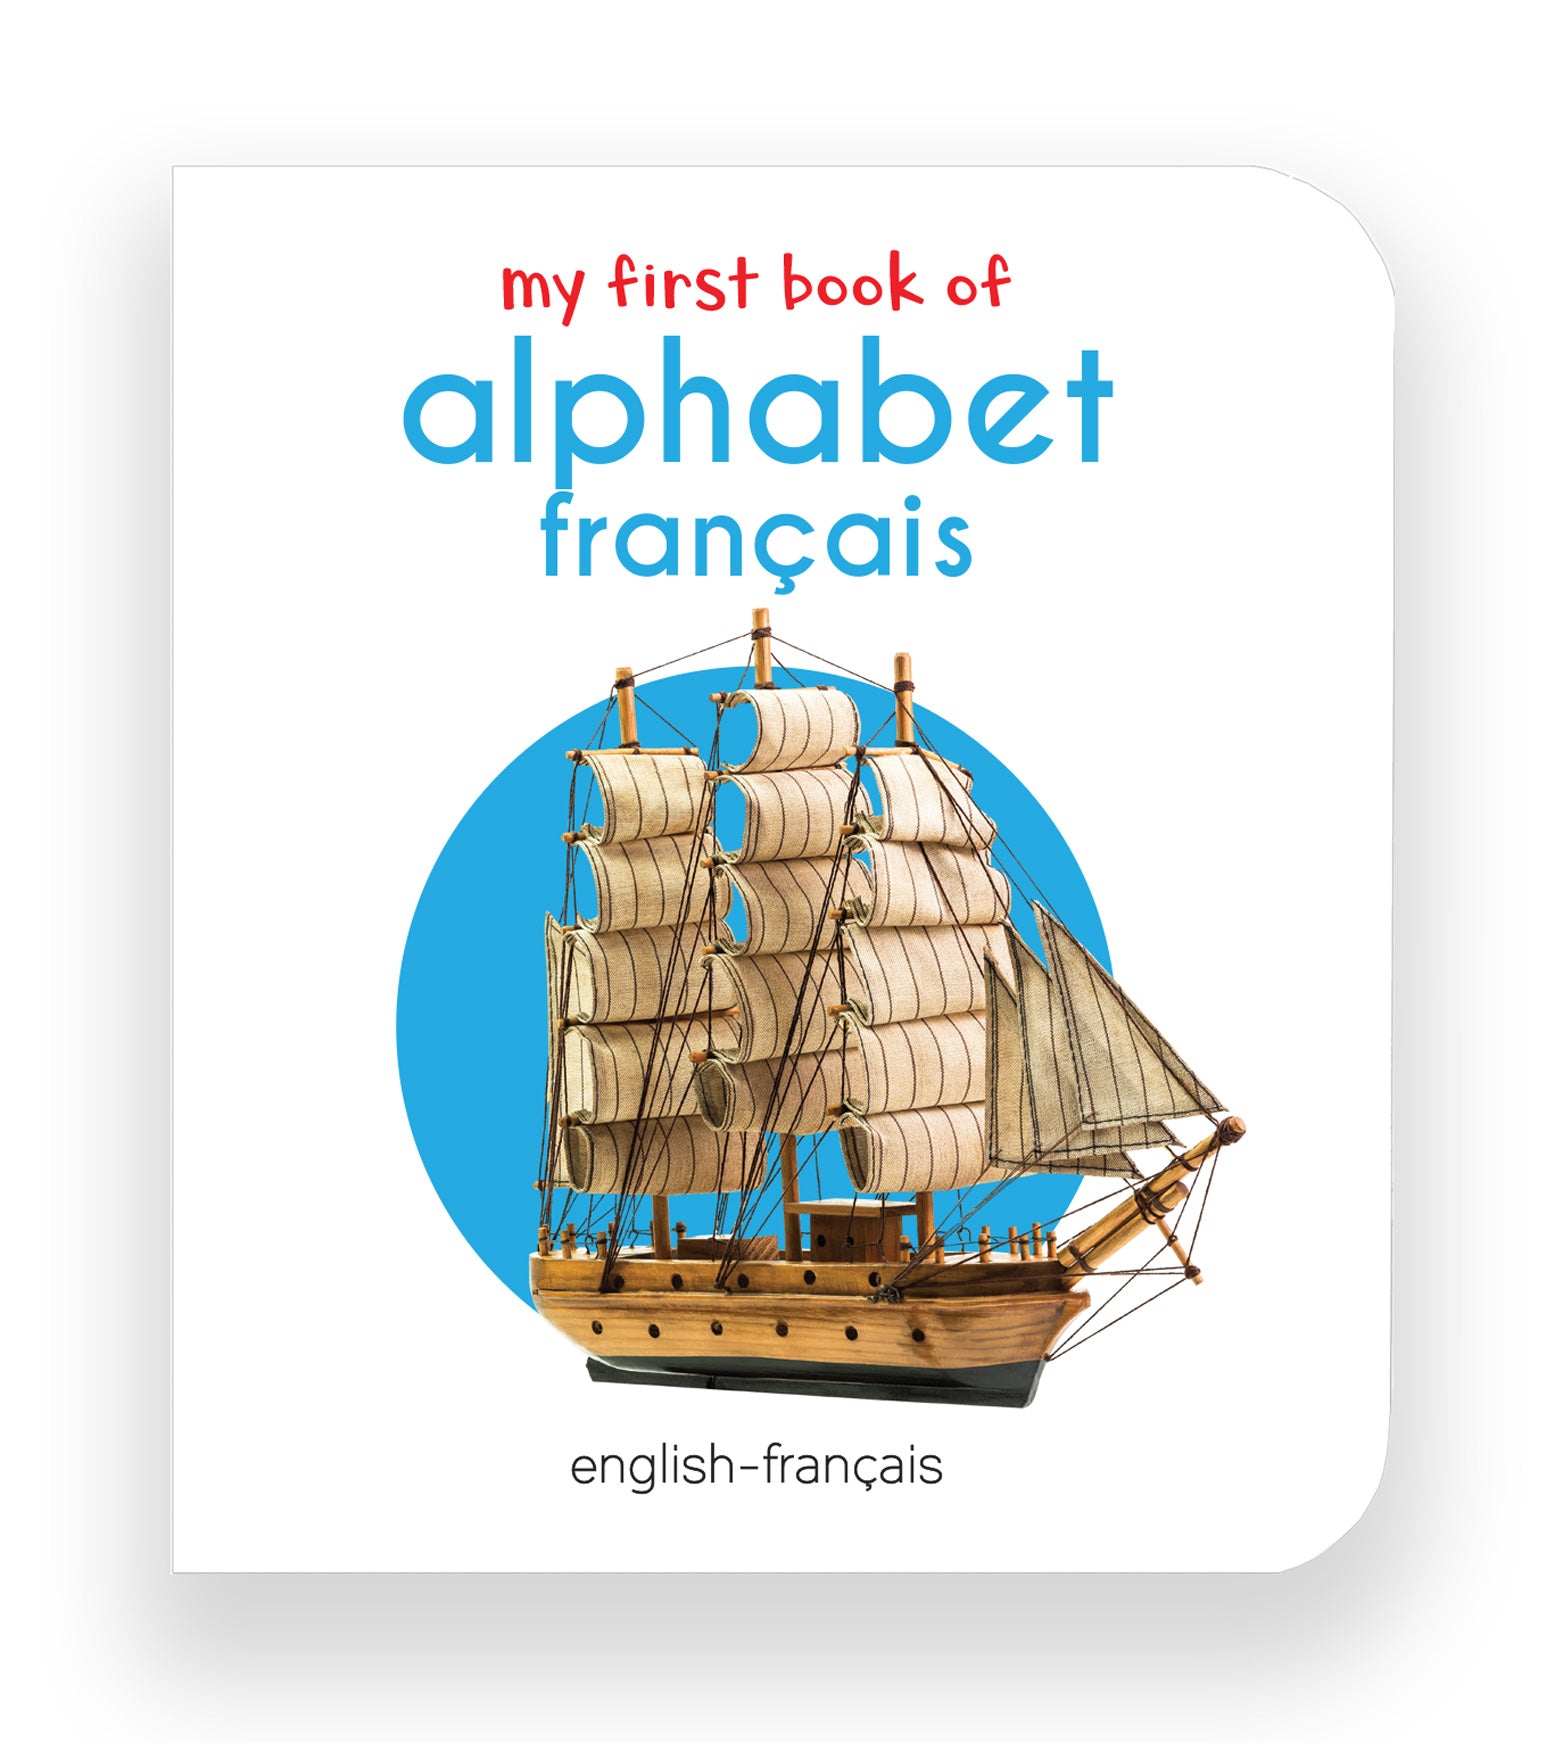 My First Book of Alphabet Franais - Spanish Alphabet: My First English French Board Book (English - Francais)